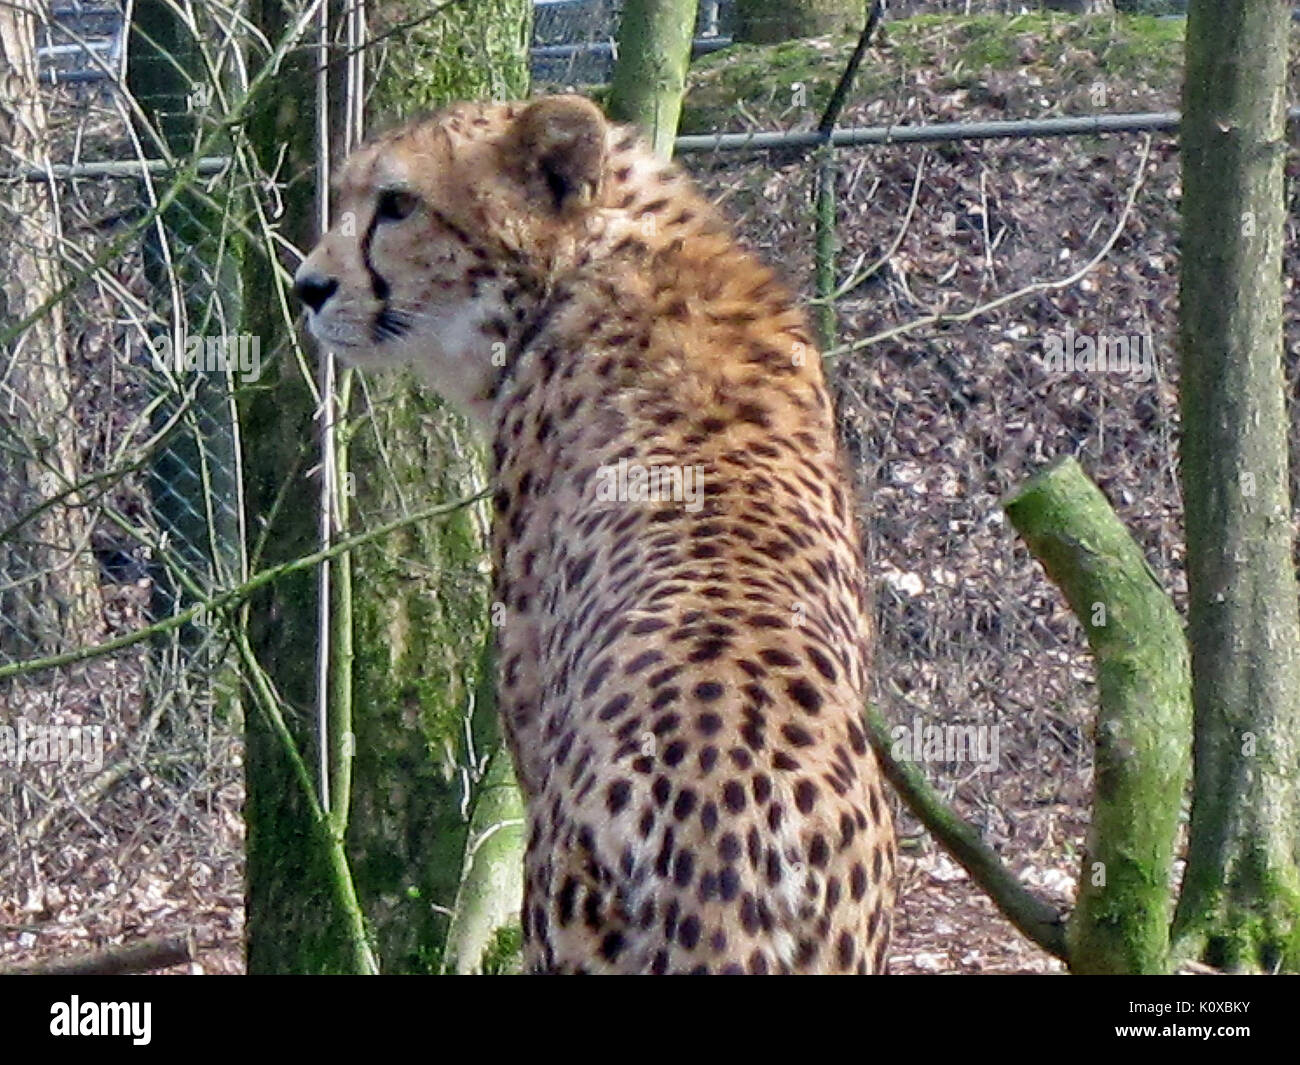 Acinonyx jubatus (Cheetah), Burgers zoo, Arnhem, the Netherlands Stock Photo